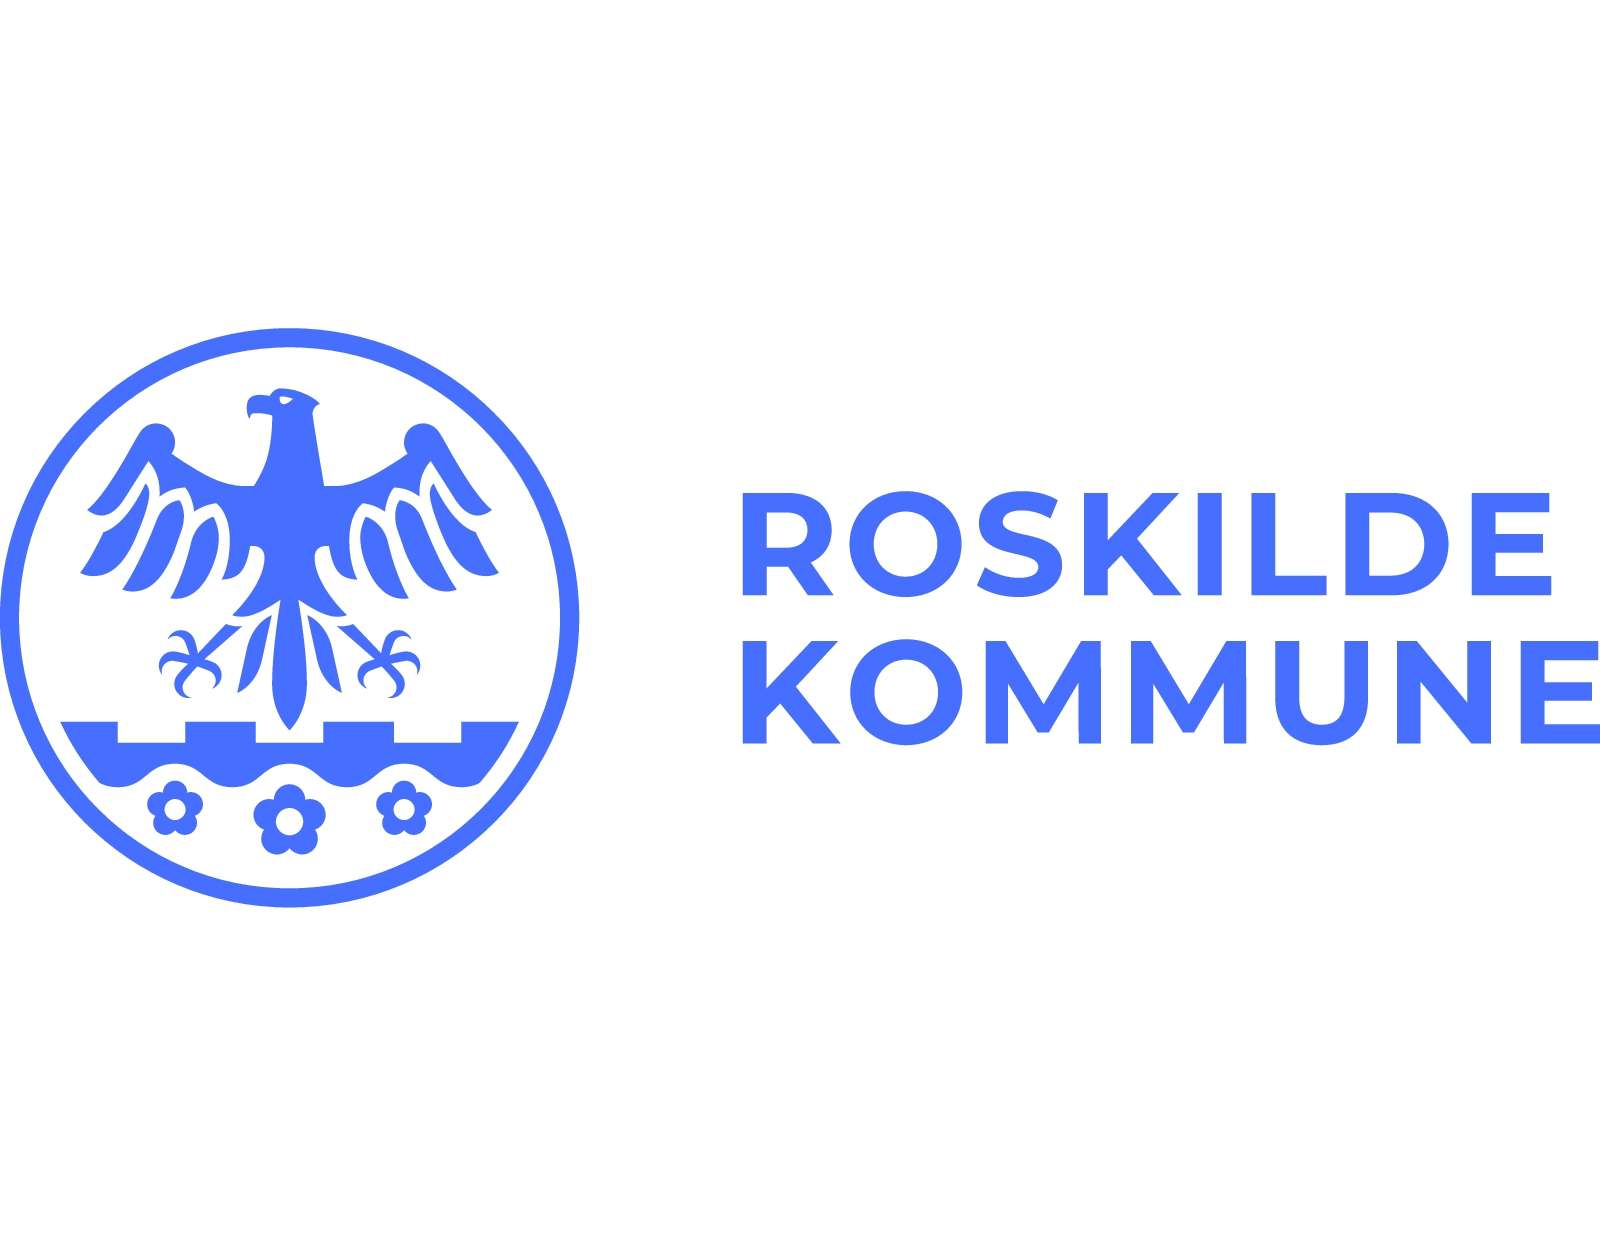 RK _ Logo _ RGB _ 12 Blå lys